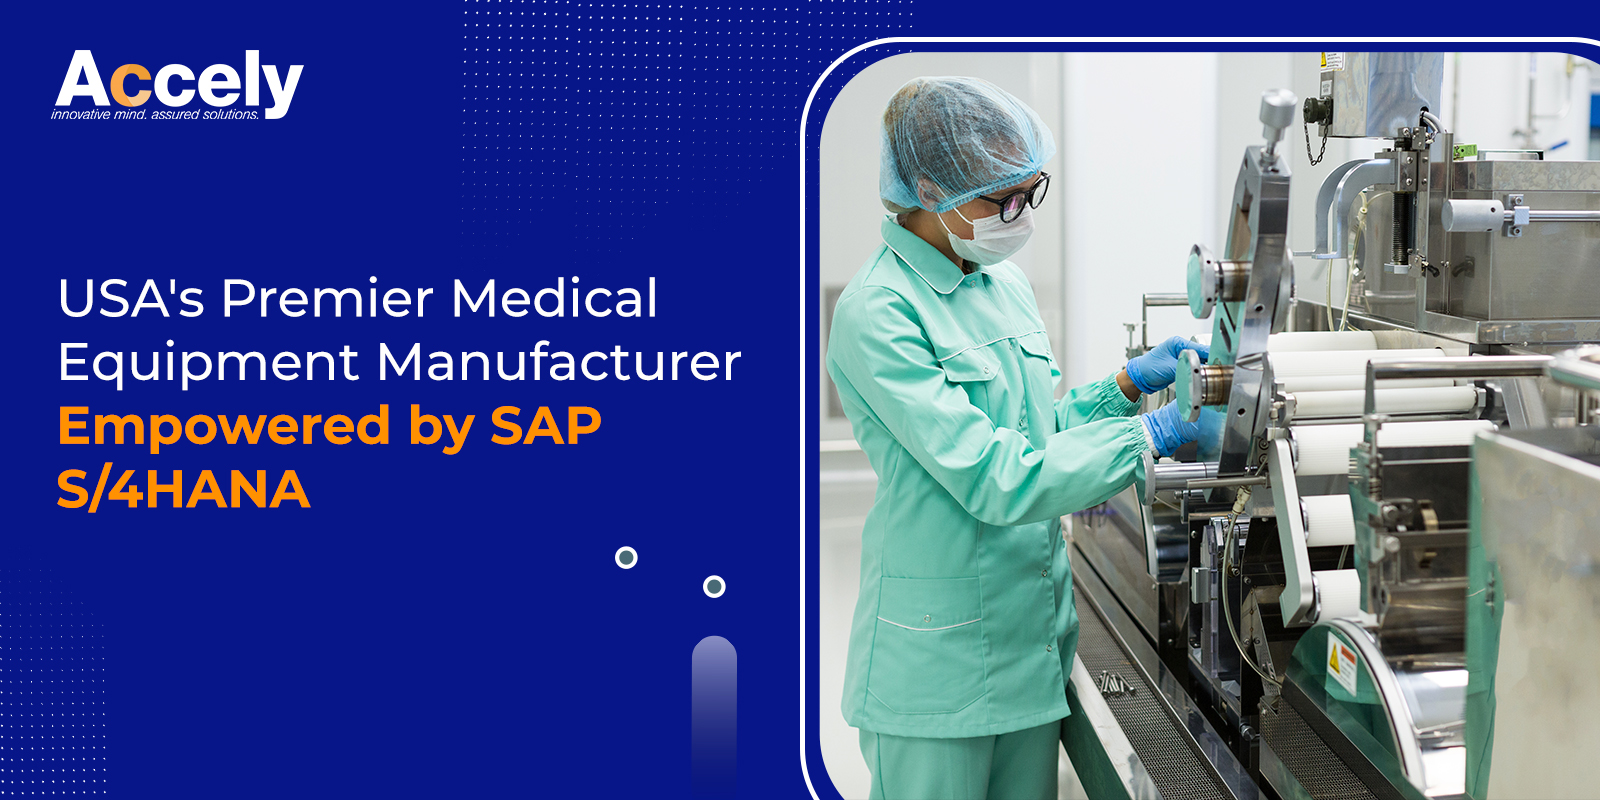 USA's Premier Medical Equipment Manufacturer Empowered by SAP S/4HANA